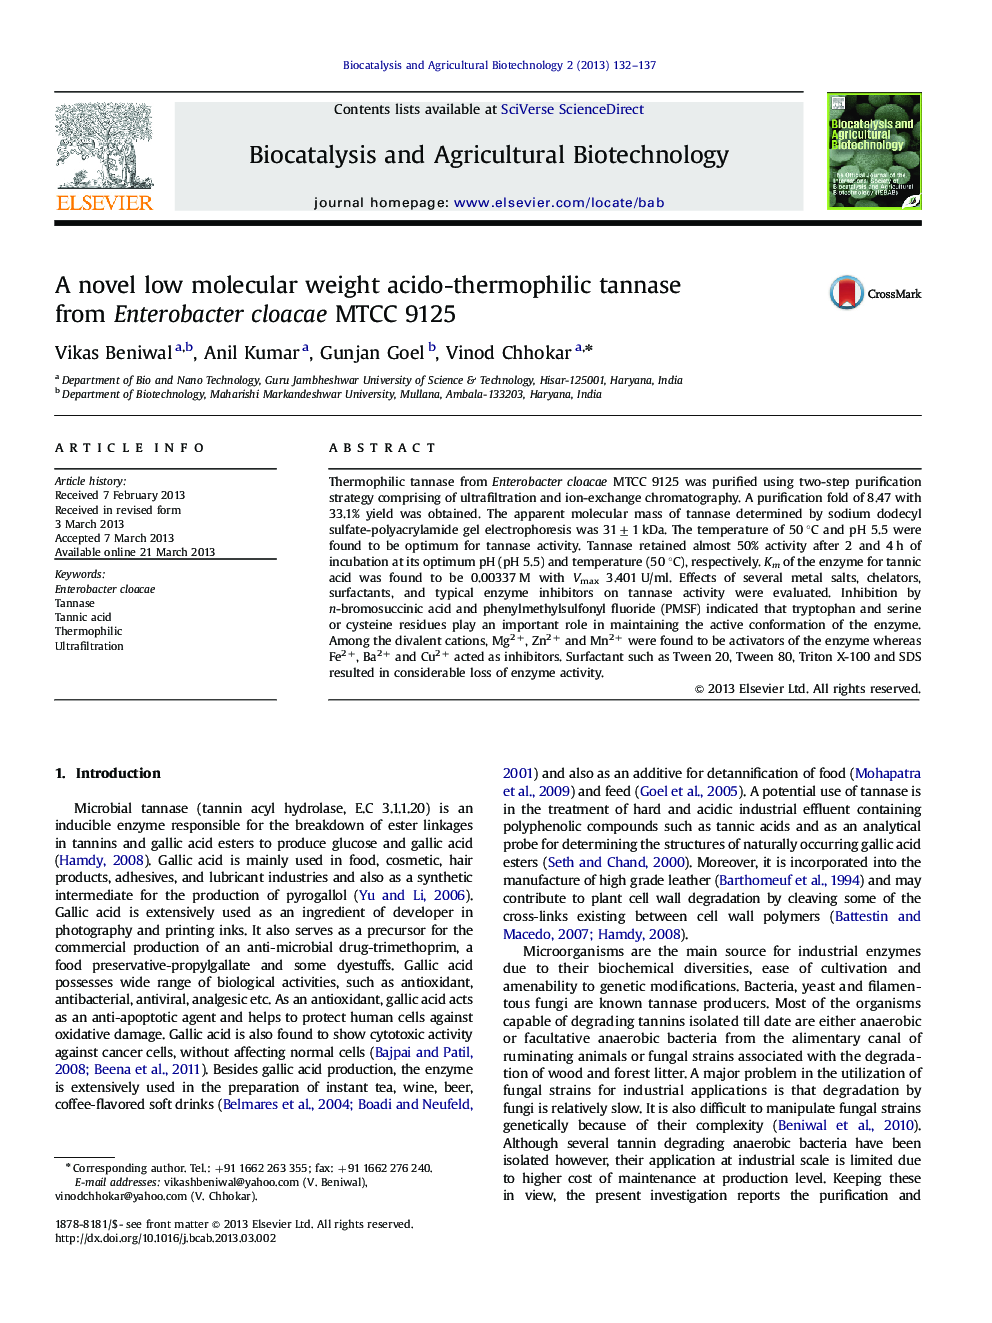 A novel low molecular weight acido-thermophilic tannase from Enterobacter cloacae MTCC 9125